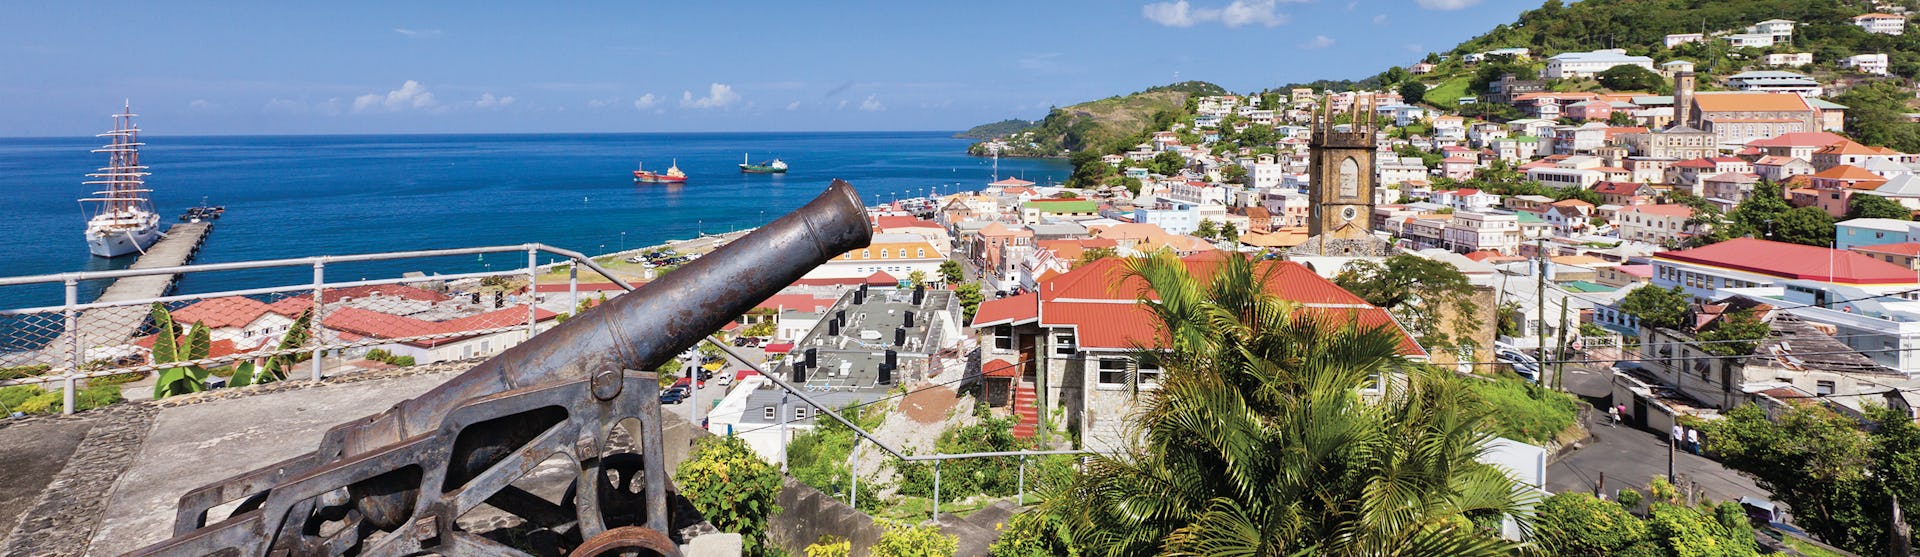 Ofertas de cruceros por Grenada